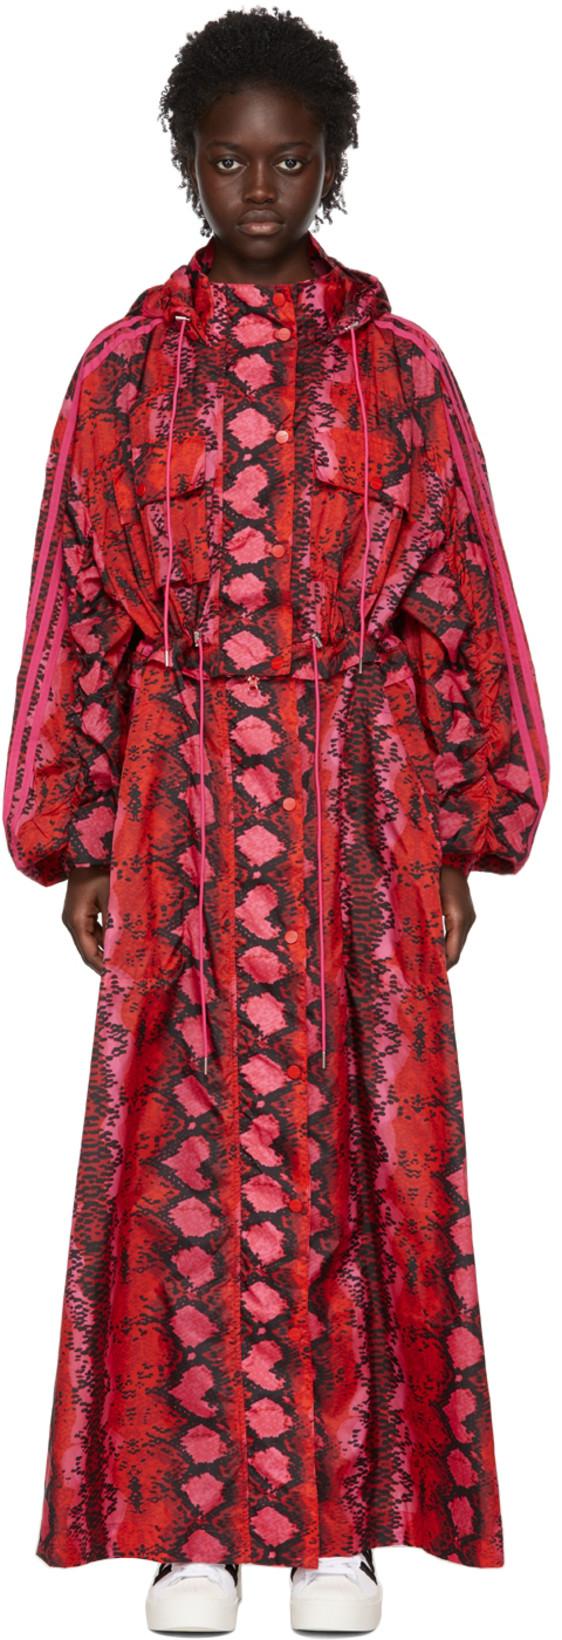 Red Nylon Coat by ADIDAS X IVY PARK